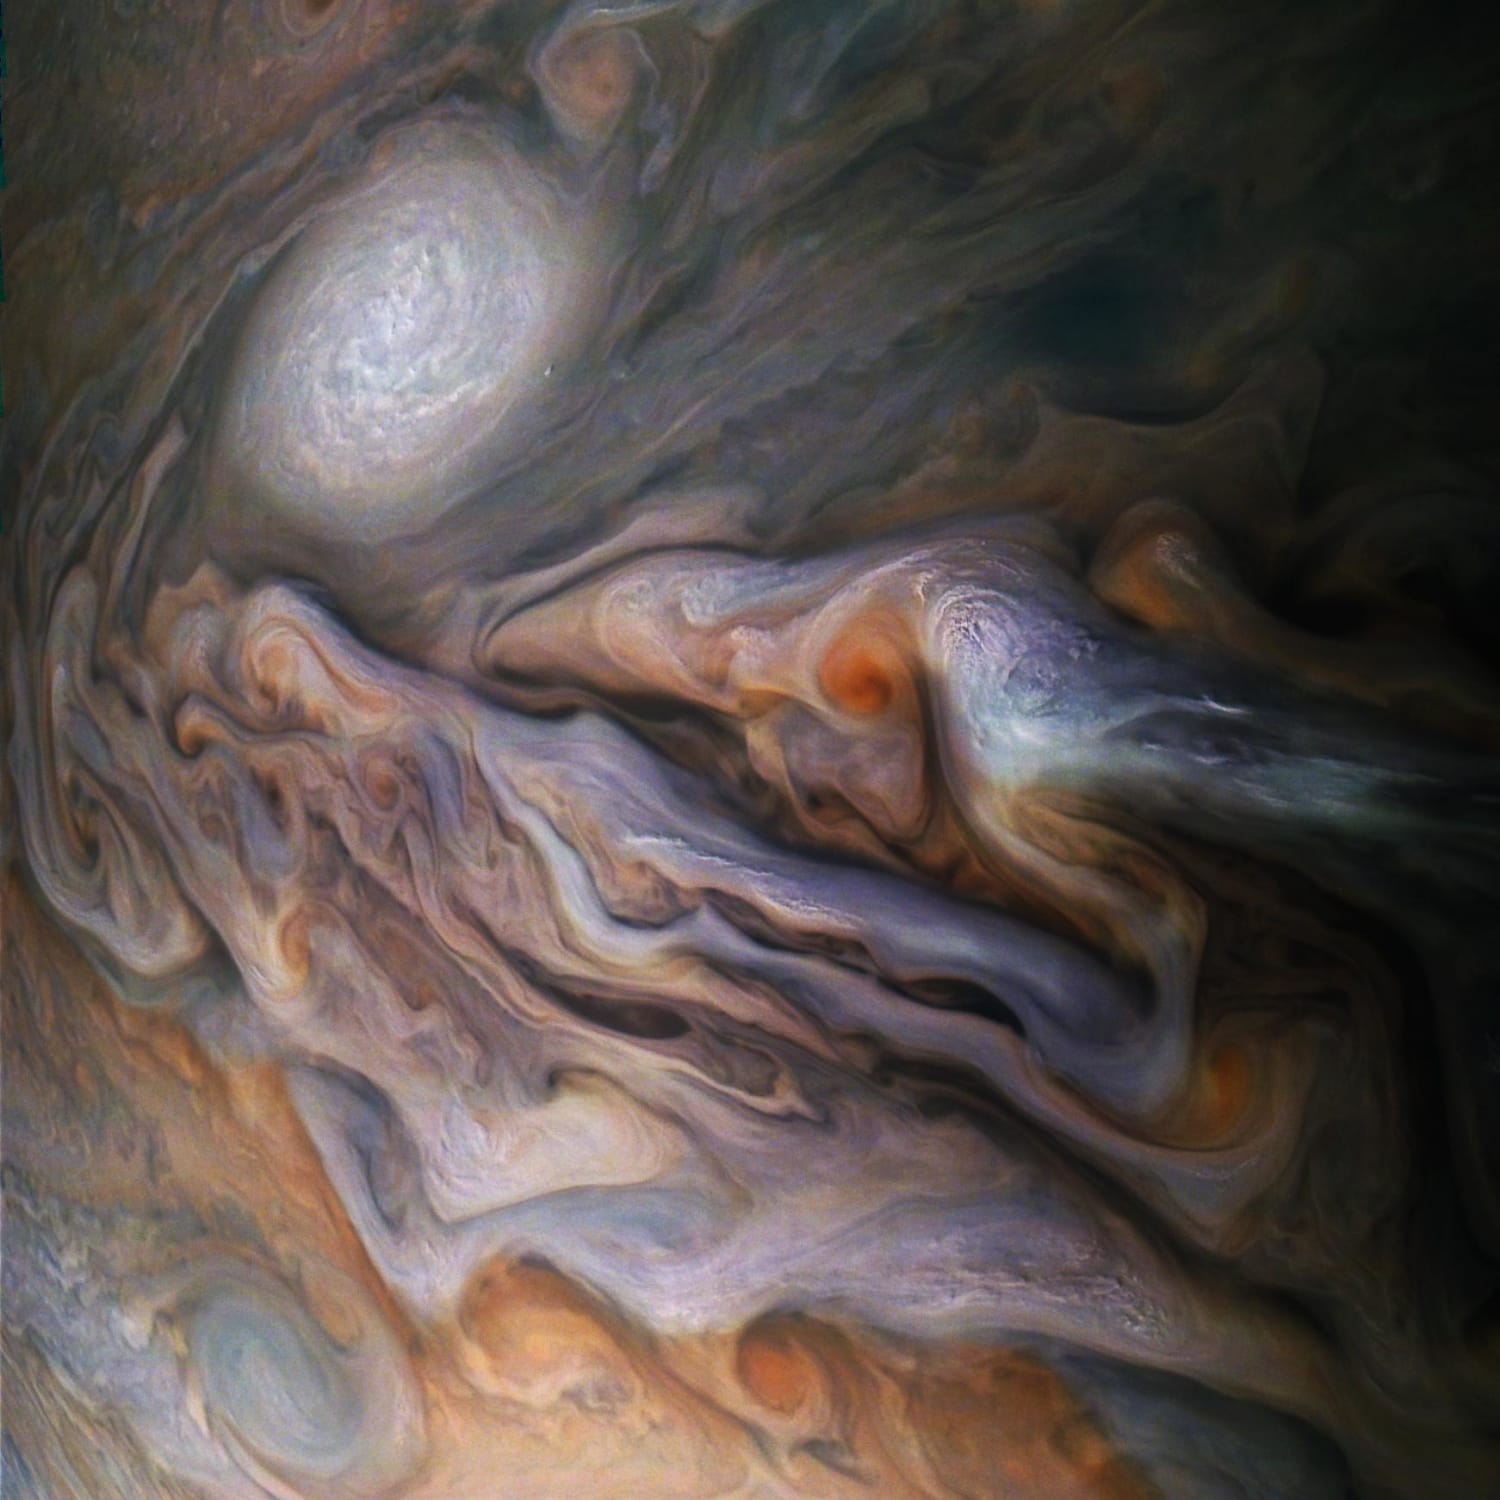 Jupiter's Magnificent Swirling Clouds. (color-enhanced) Credit:NASA